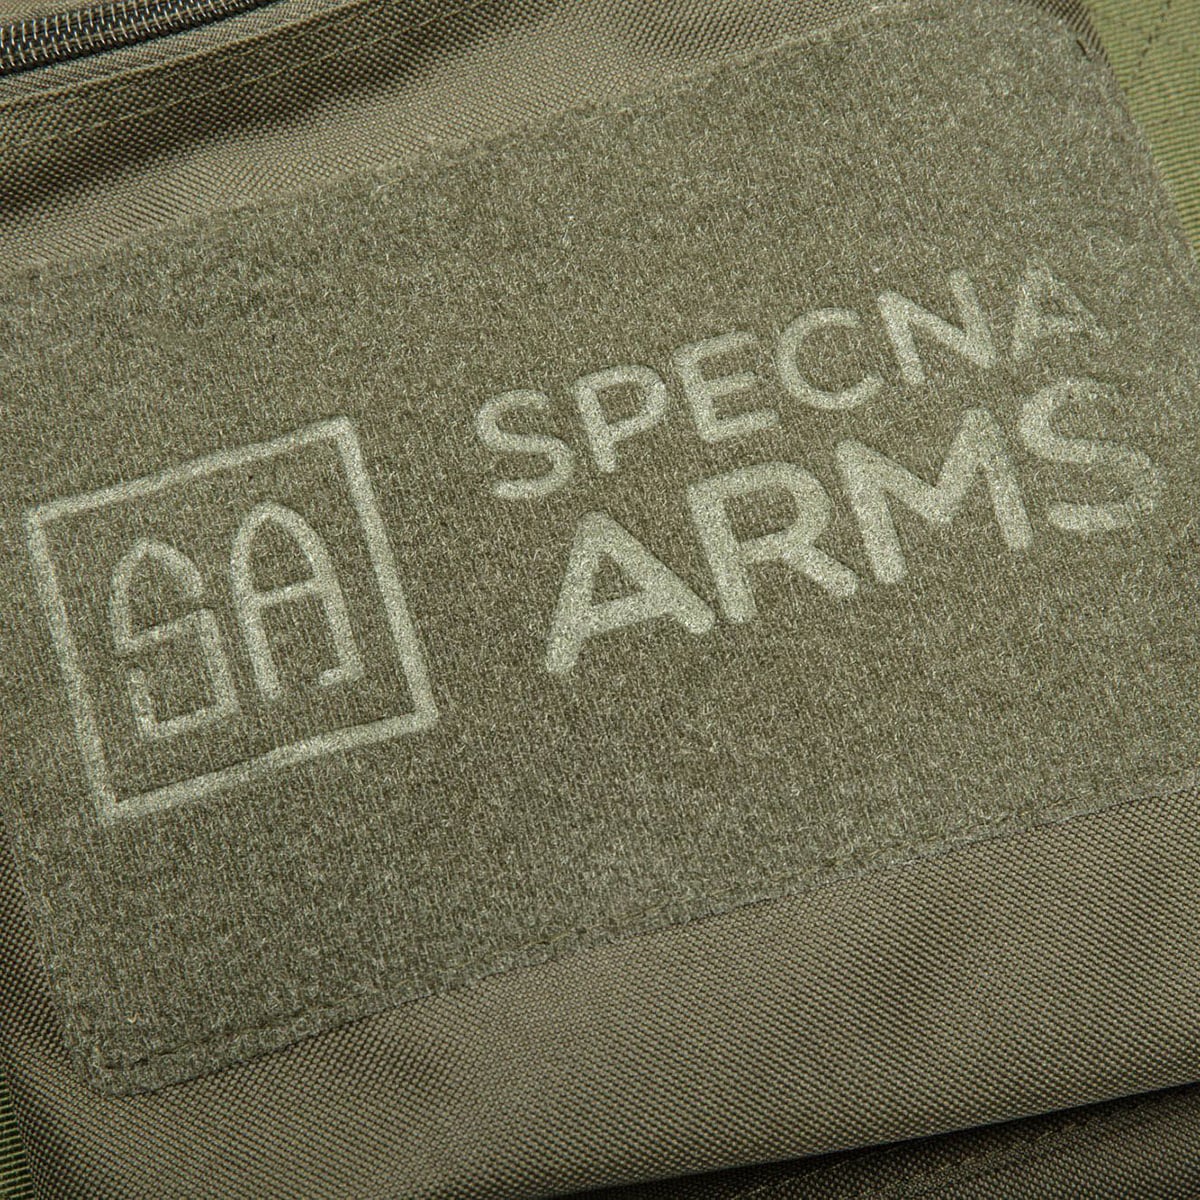 Репліка сумки для зброї Specna Arms ASG V2 - Olive